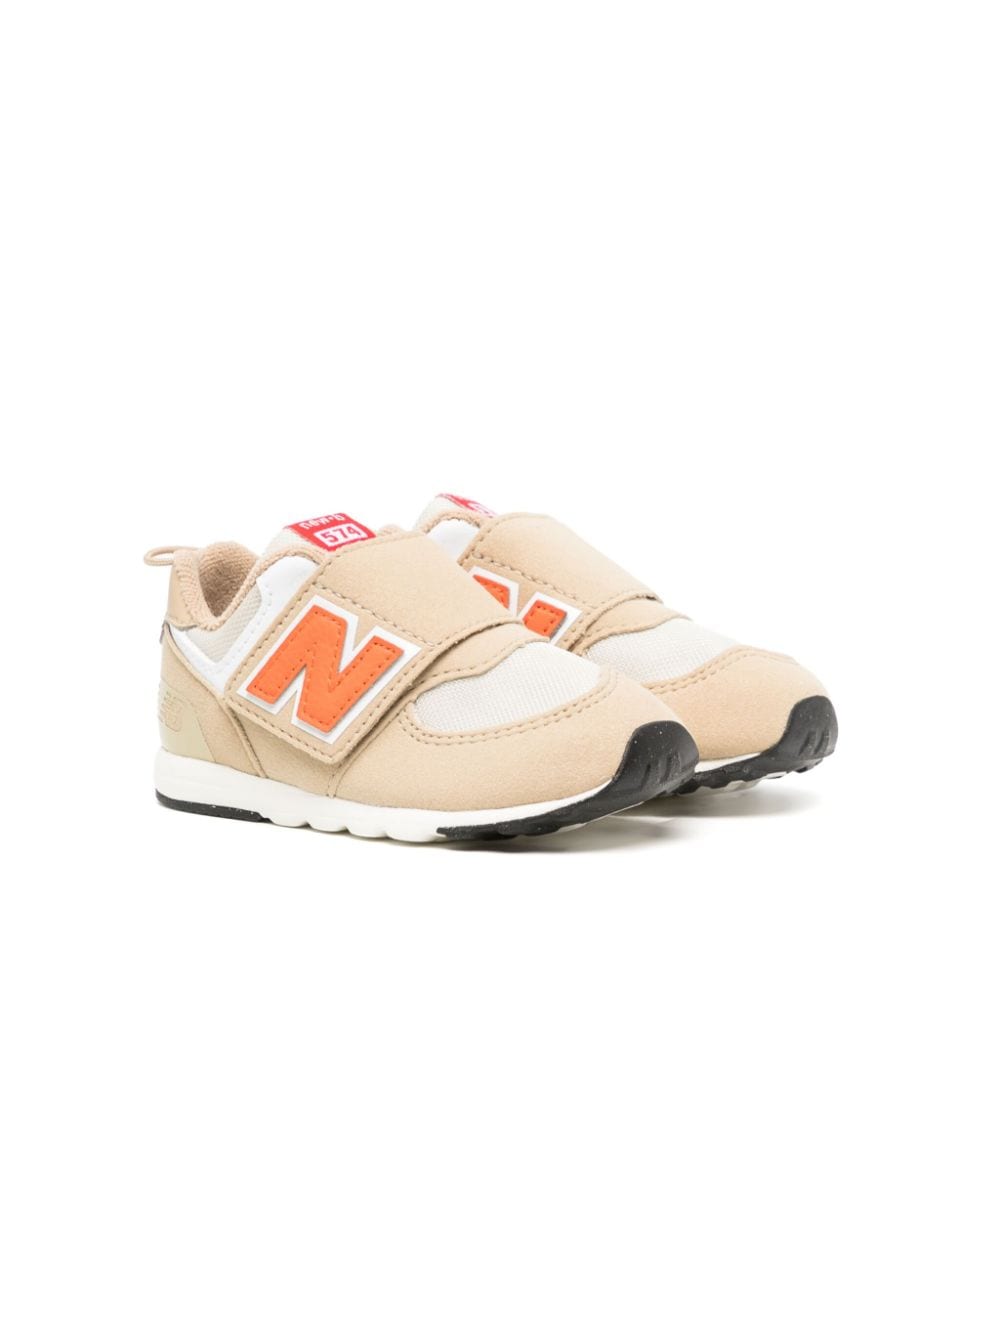 New Balance Kids 574 New-B sneakers - Brown